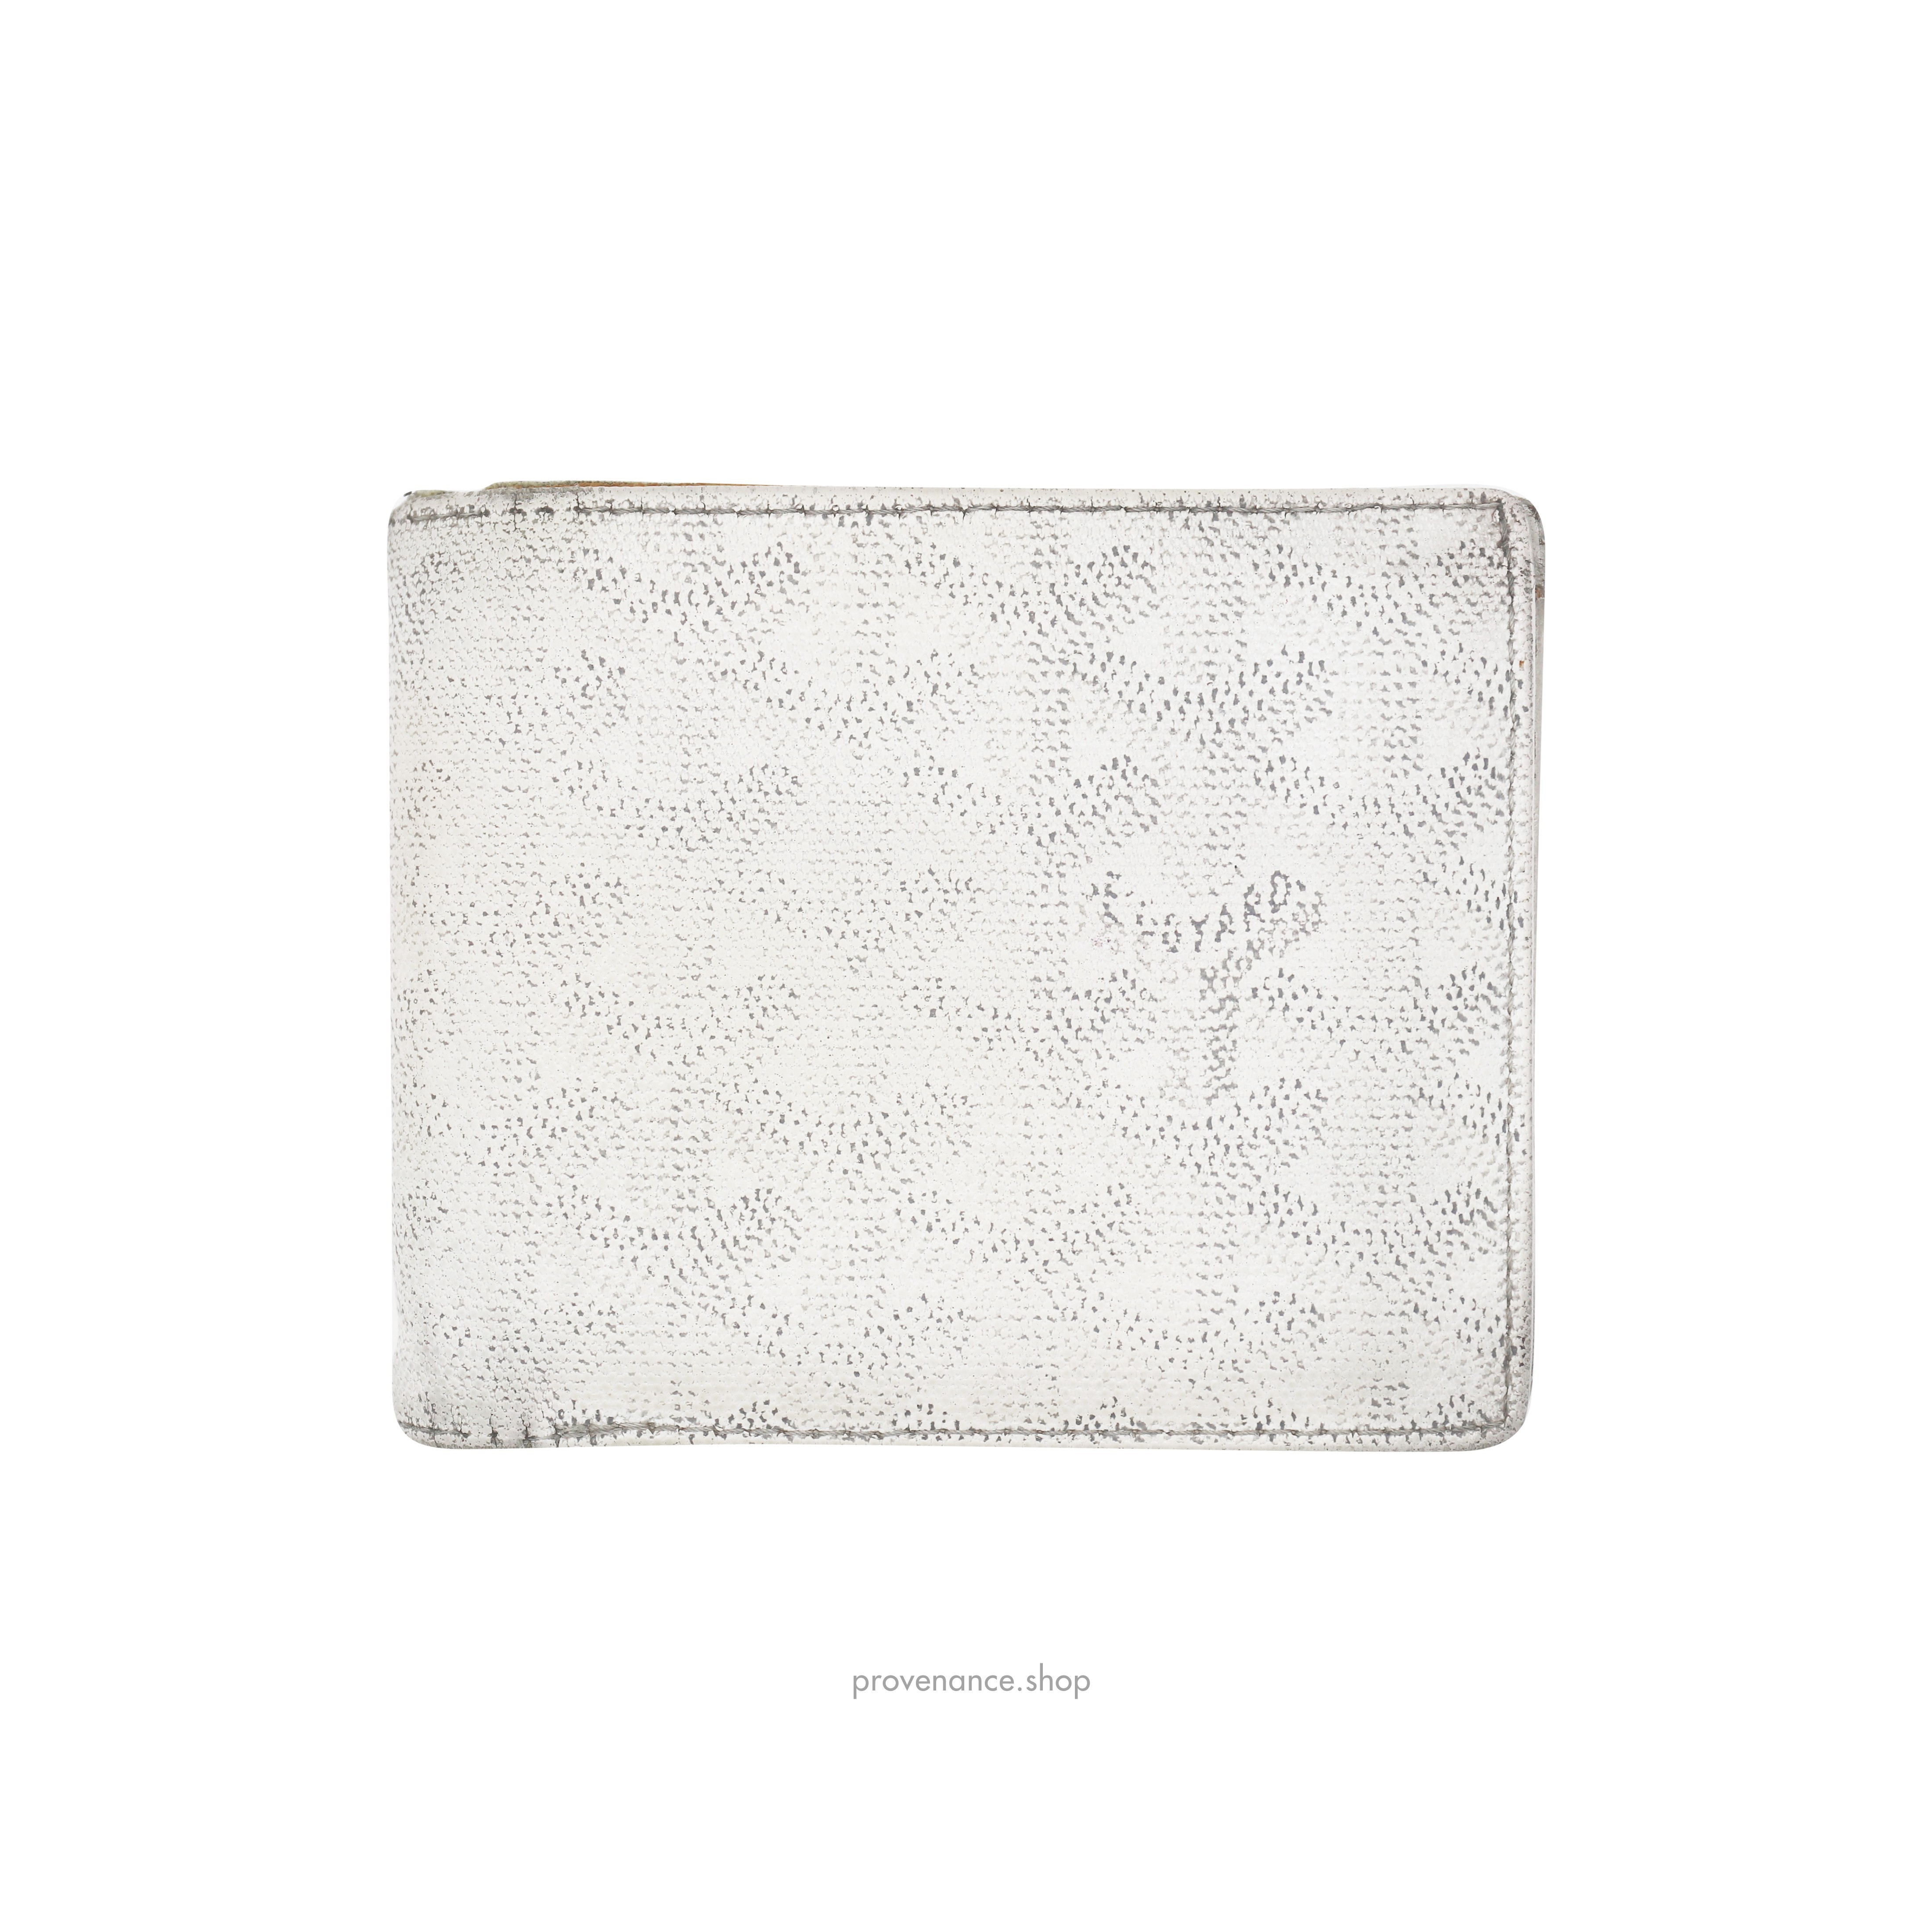 St. Florentin Wallet -White Goyardine - 2